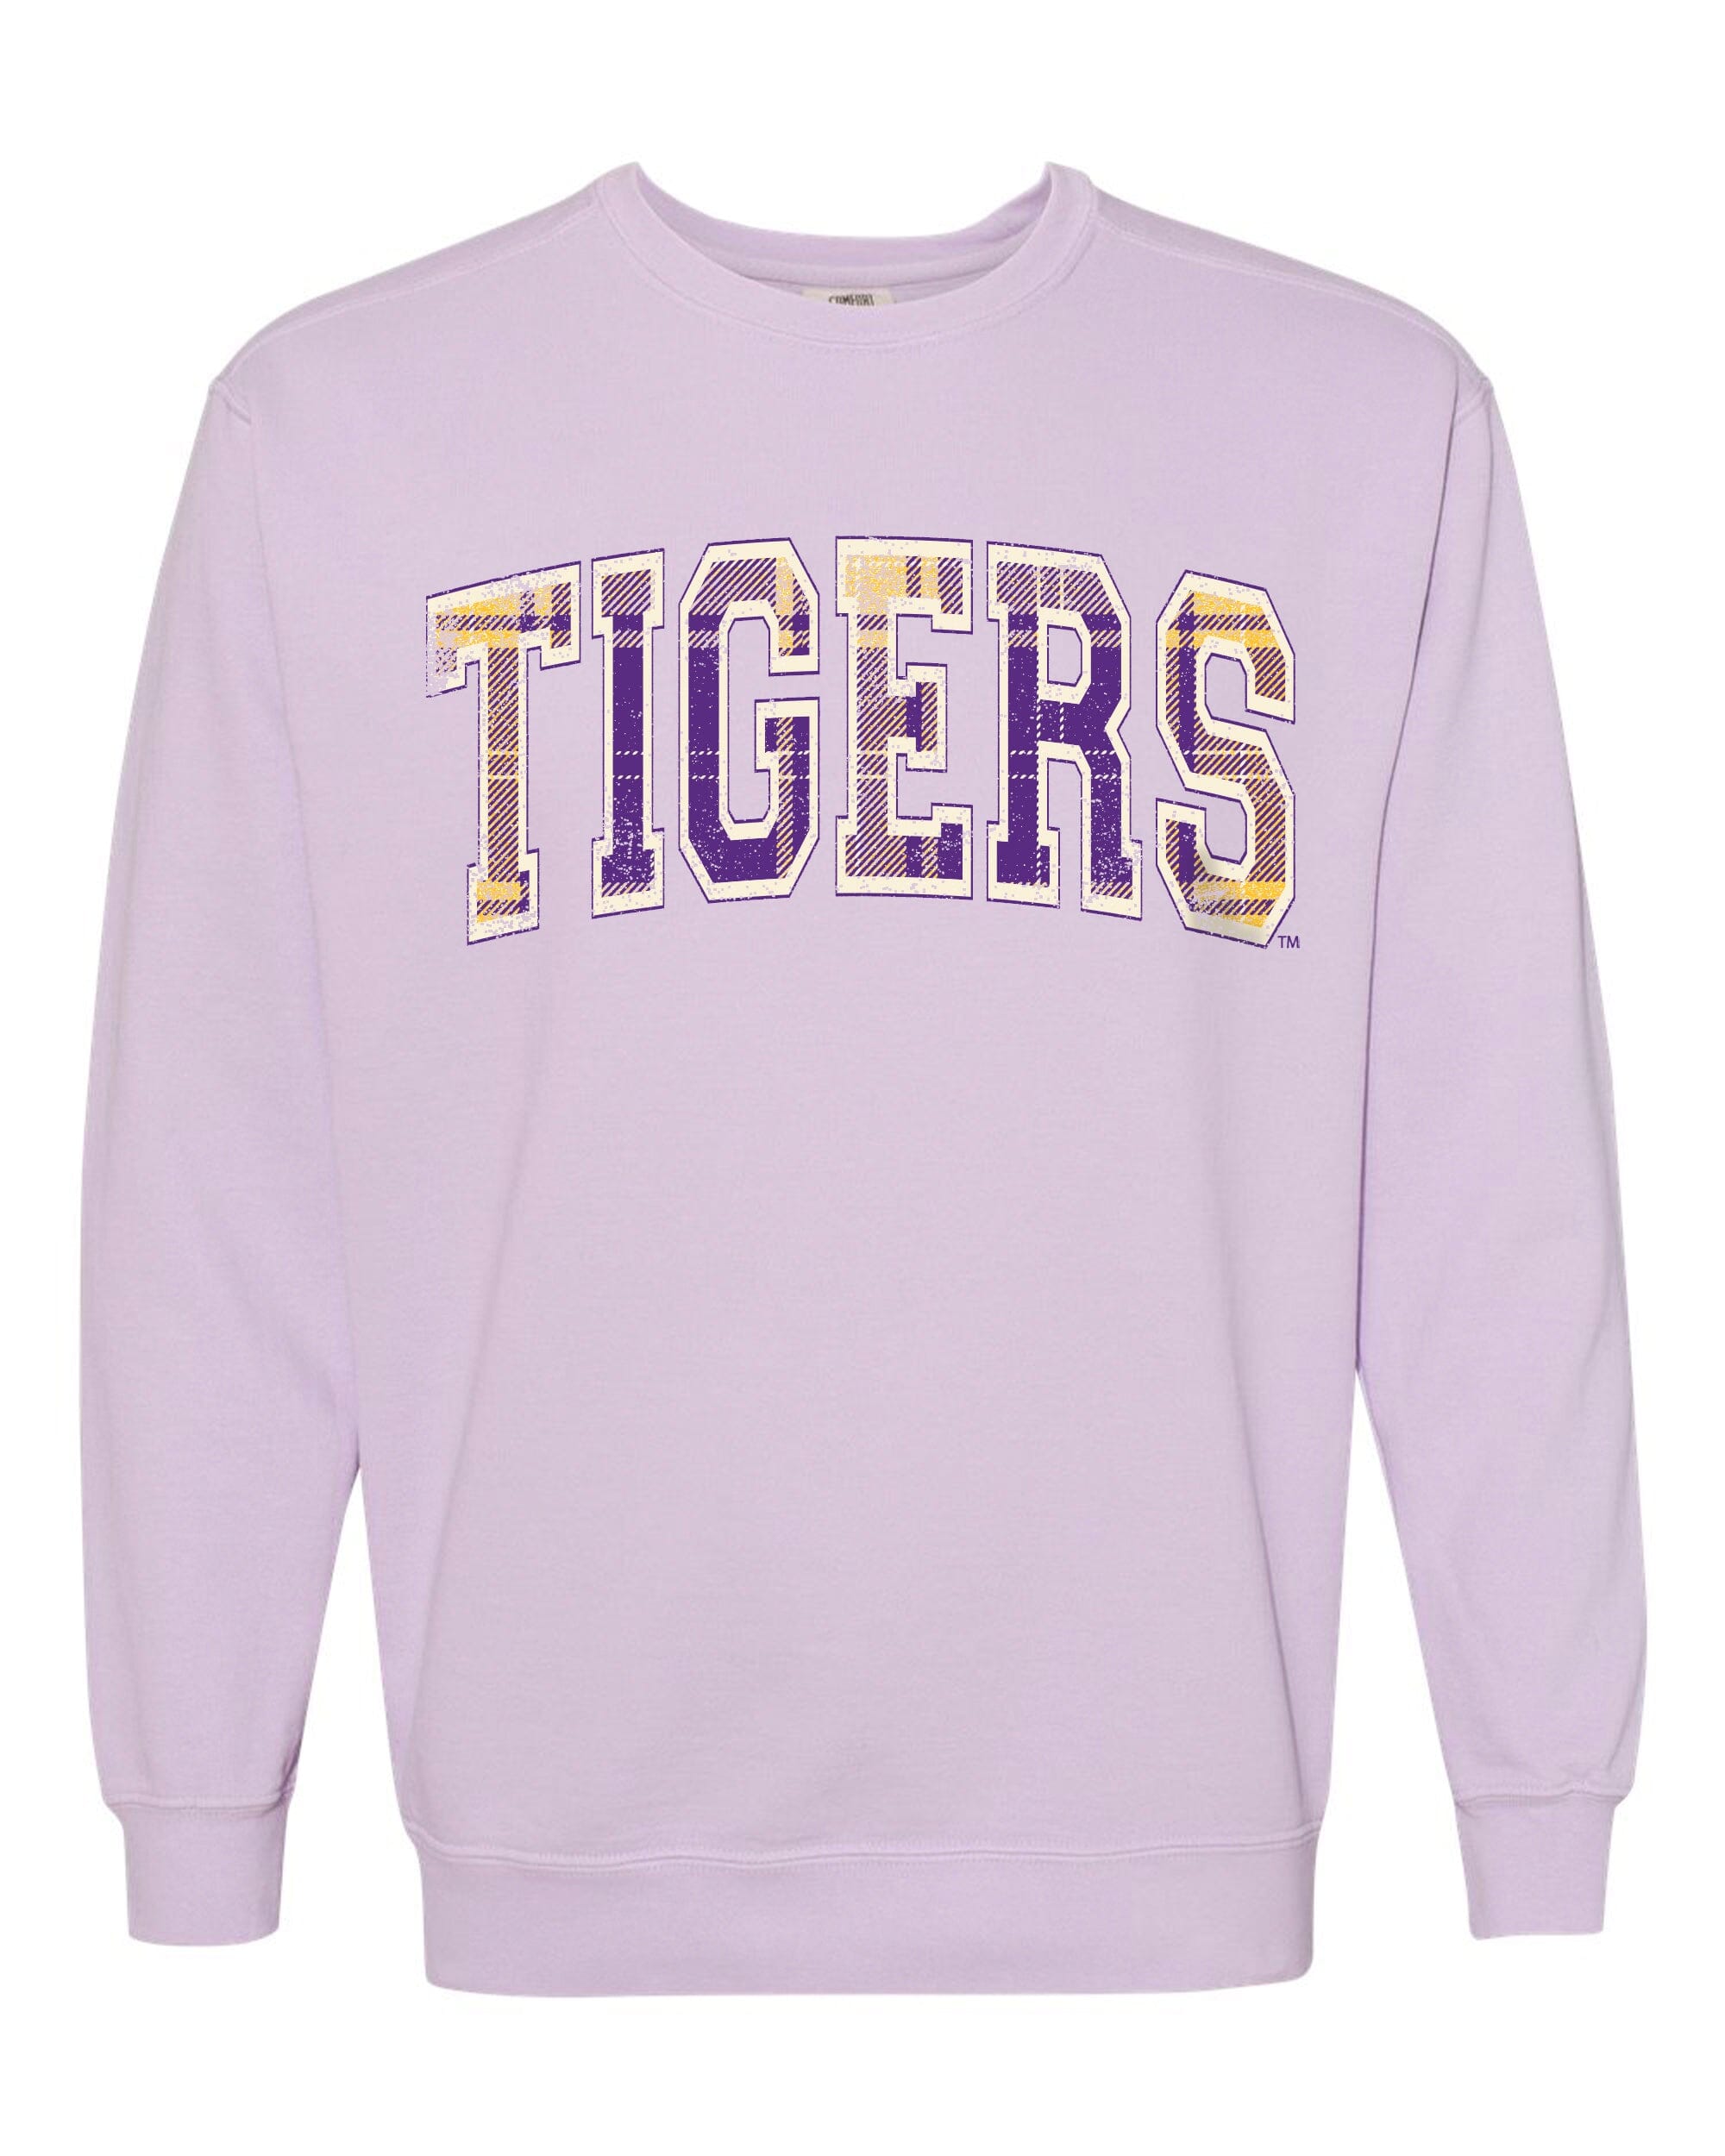 LSU Tigers Tartan Orchid Sweatshirt - shoplivylu